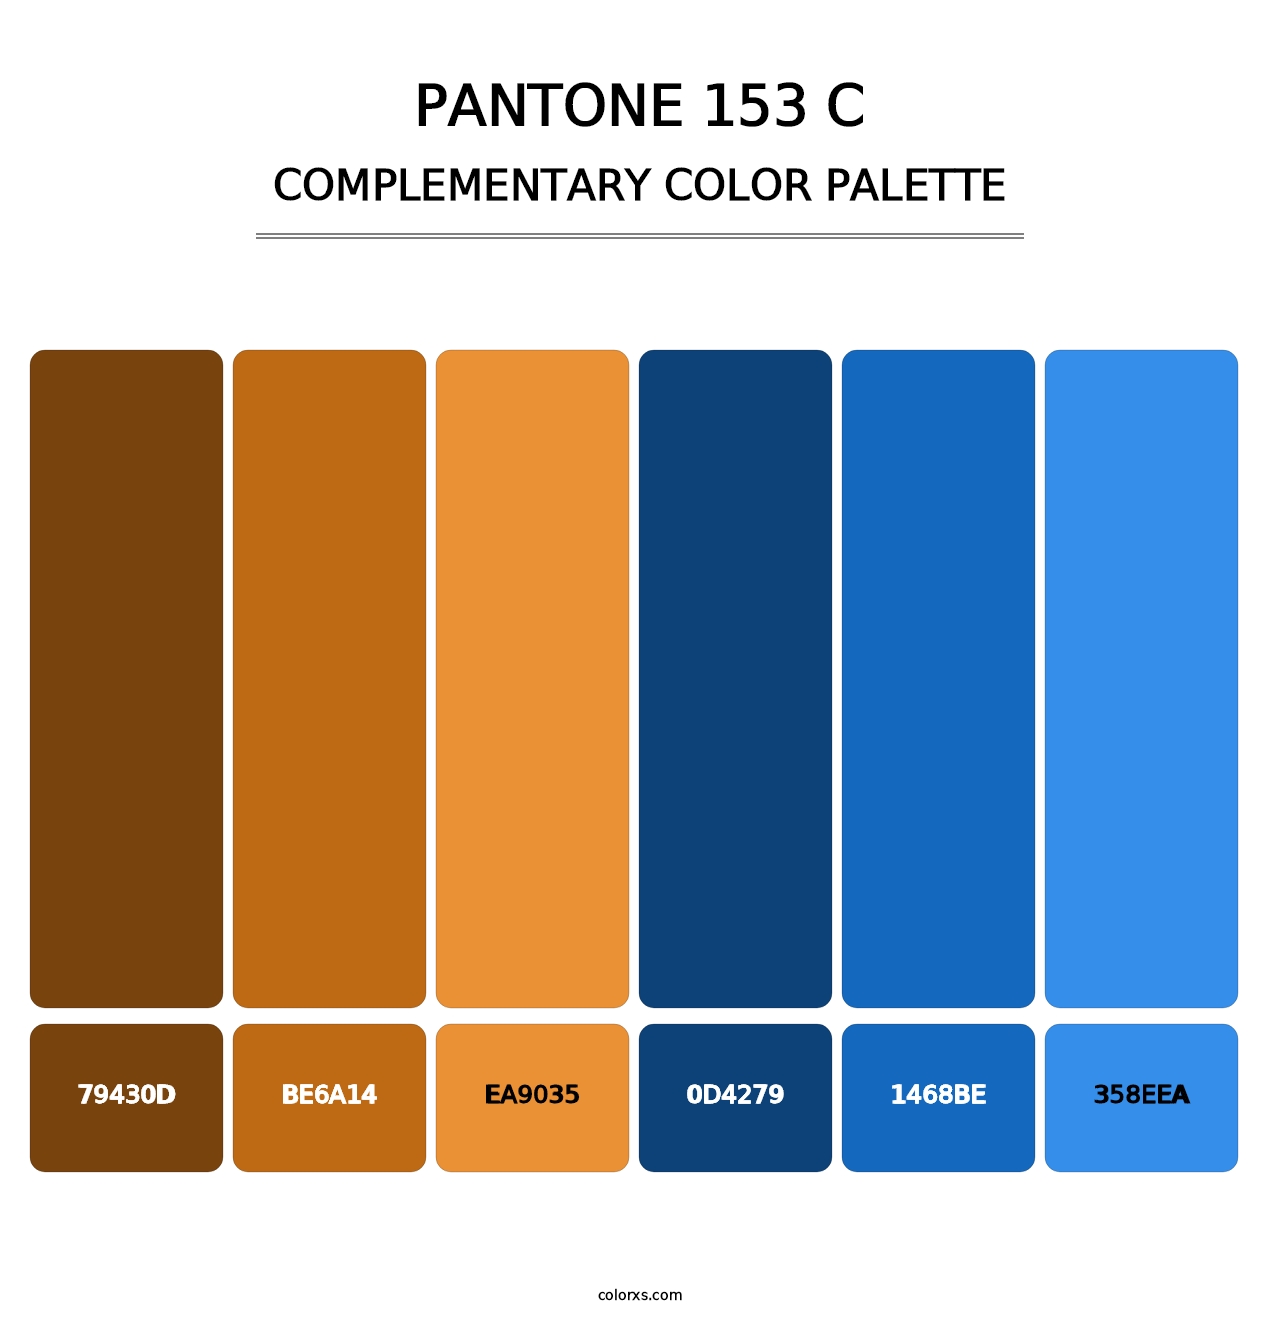 PANTONE 153 C - Complementary Color Palette